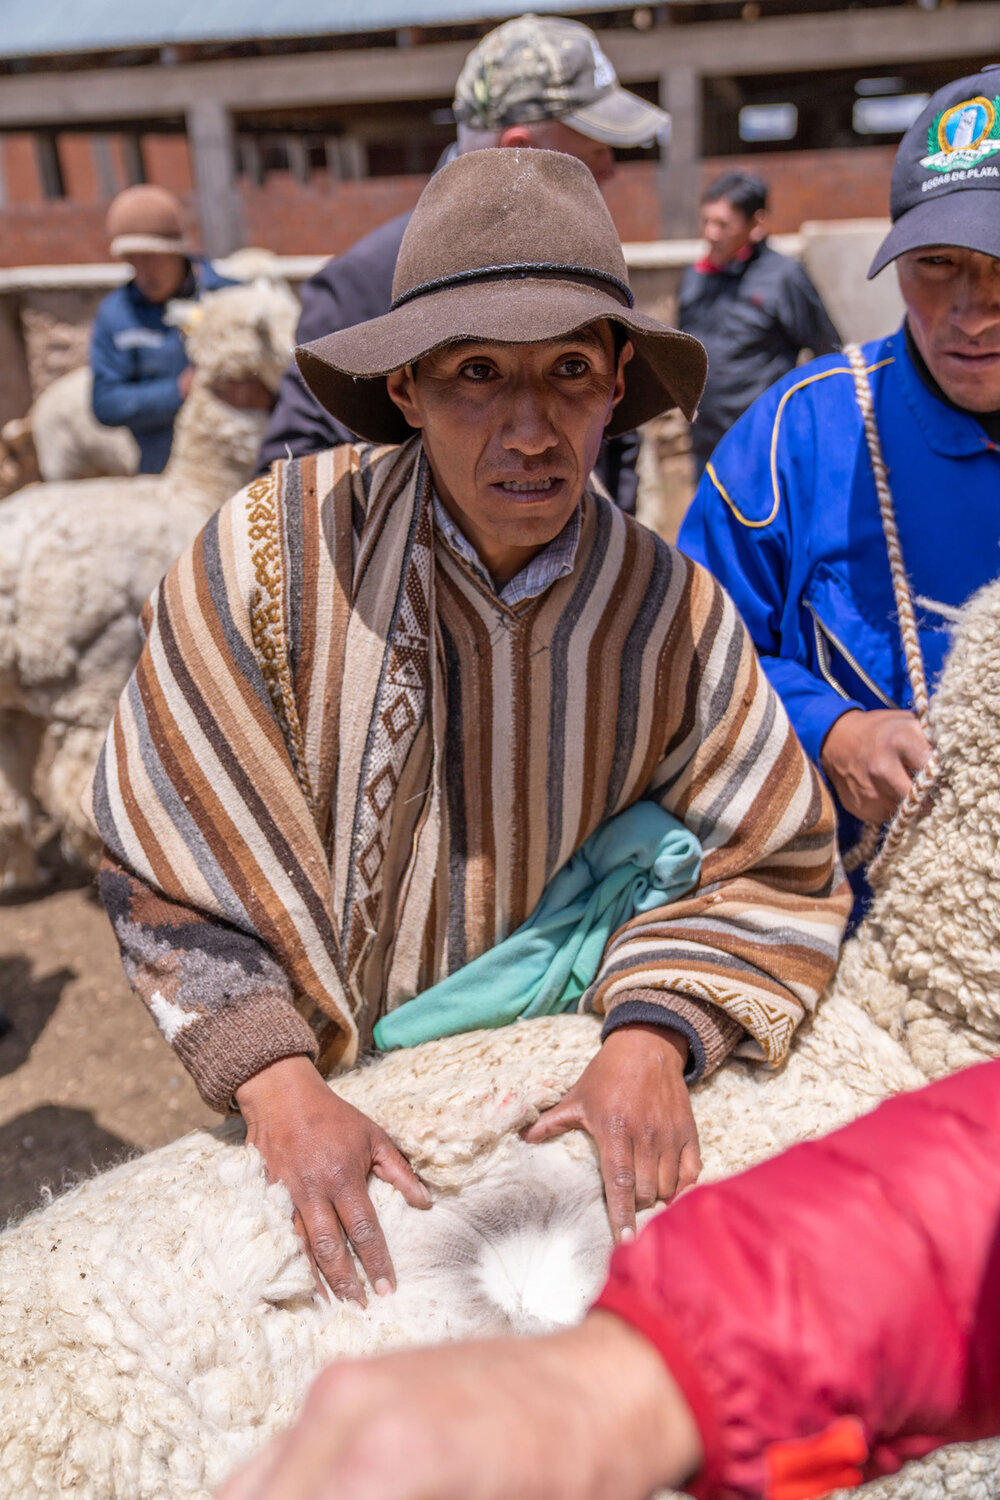 103_Wasim Muklashy Photography_Andes Mountains_Peru_Quechua Benefit_Picotani_Spar_Macusani_Alpaca.jpg